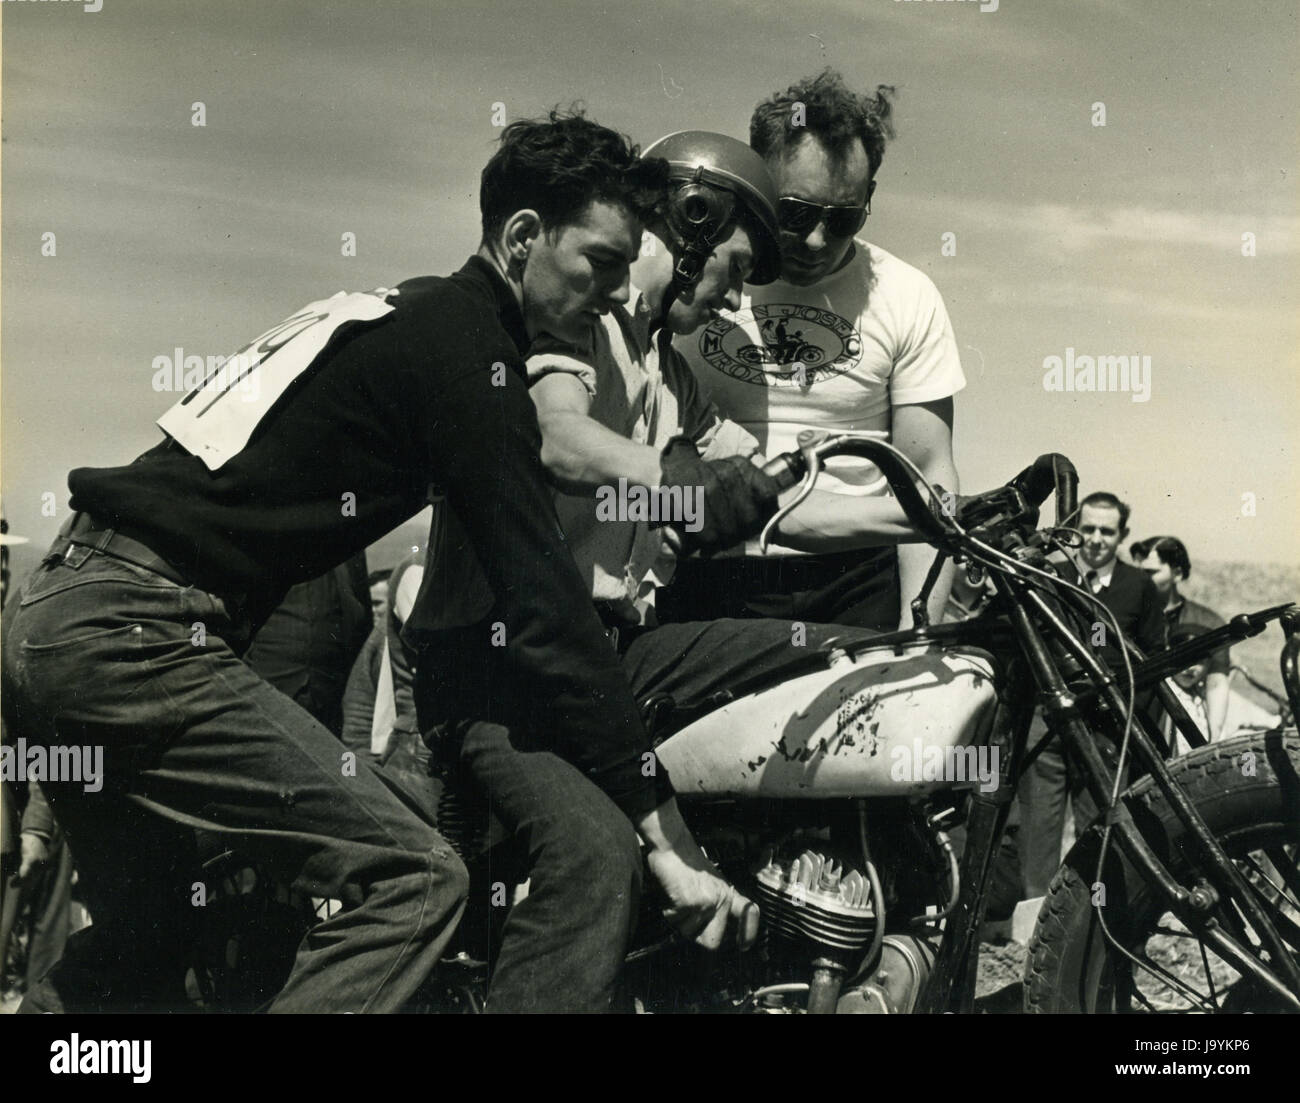 El condado de Santa Clara, California, 5 de abril de 1940 miembros de un club de motociclistas prepárate para correr en un Hill Climb. Foto de stock